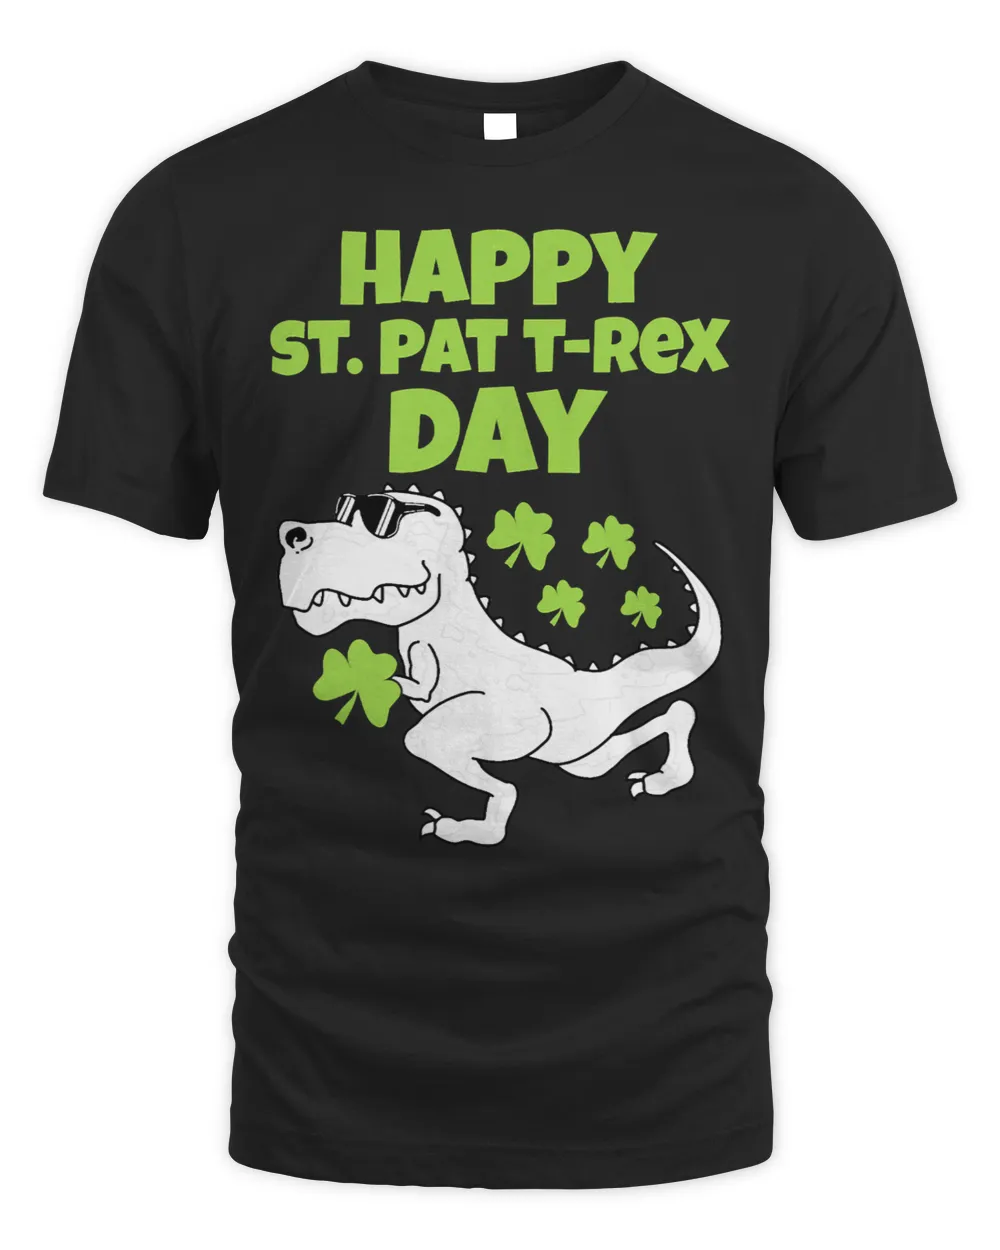 Happy St Patricks T Rex Day Women Men Boy Girl Kid Apparel T